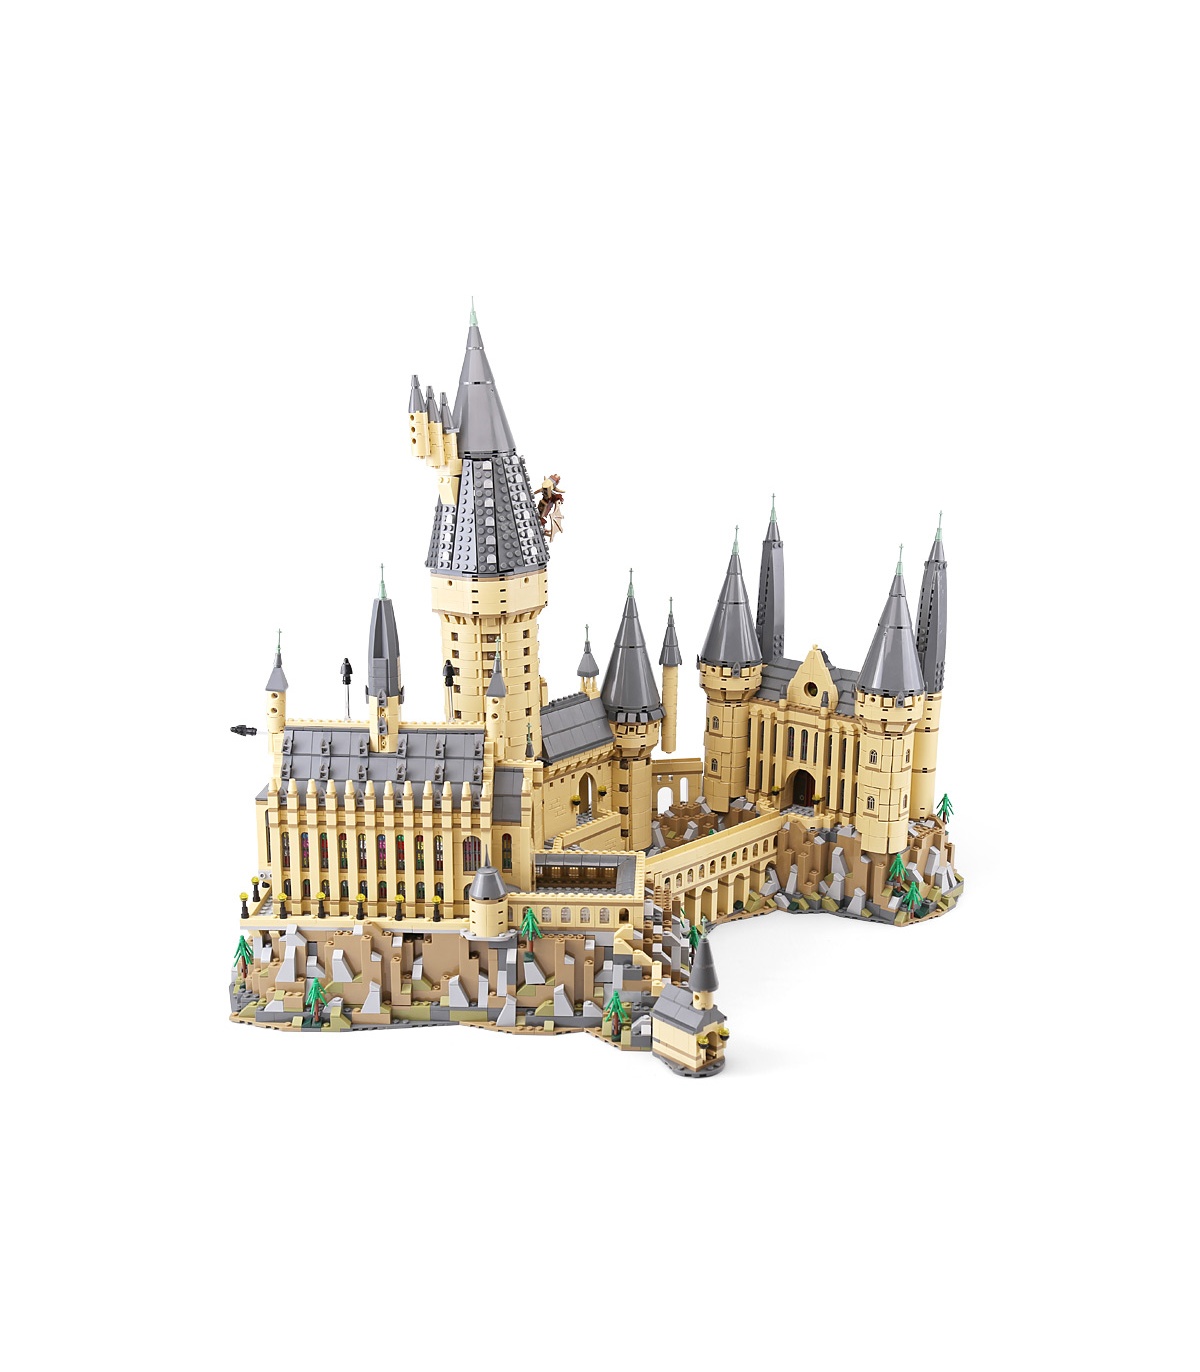 BRAND NEW 6742 Piece Harry Potter Hogwarts Castle Lego Compatible Blocks SALE 